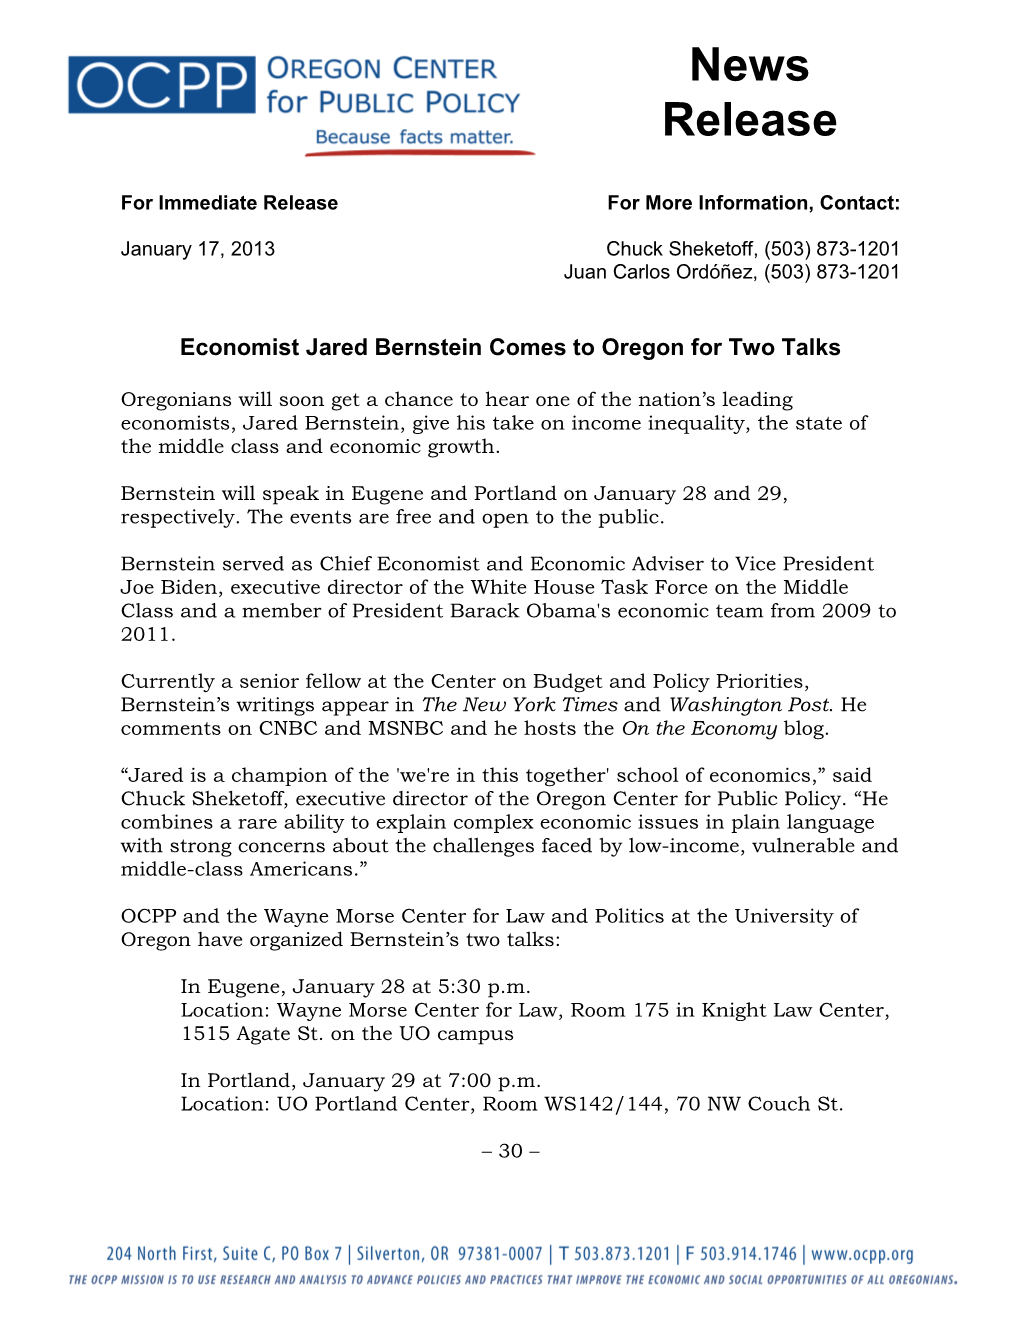 Economist Jared Bernstein Comes to Oregon for Two Talks